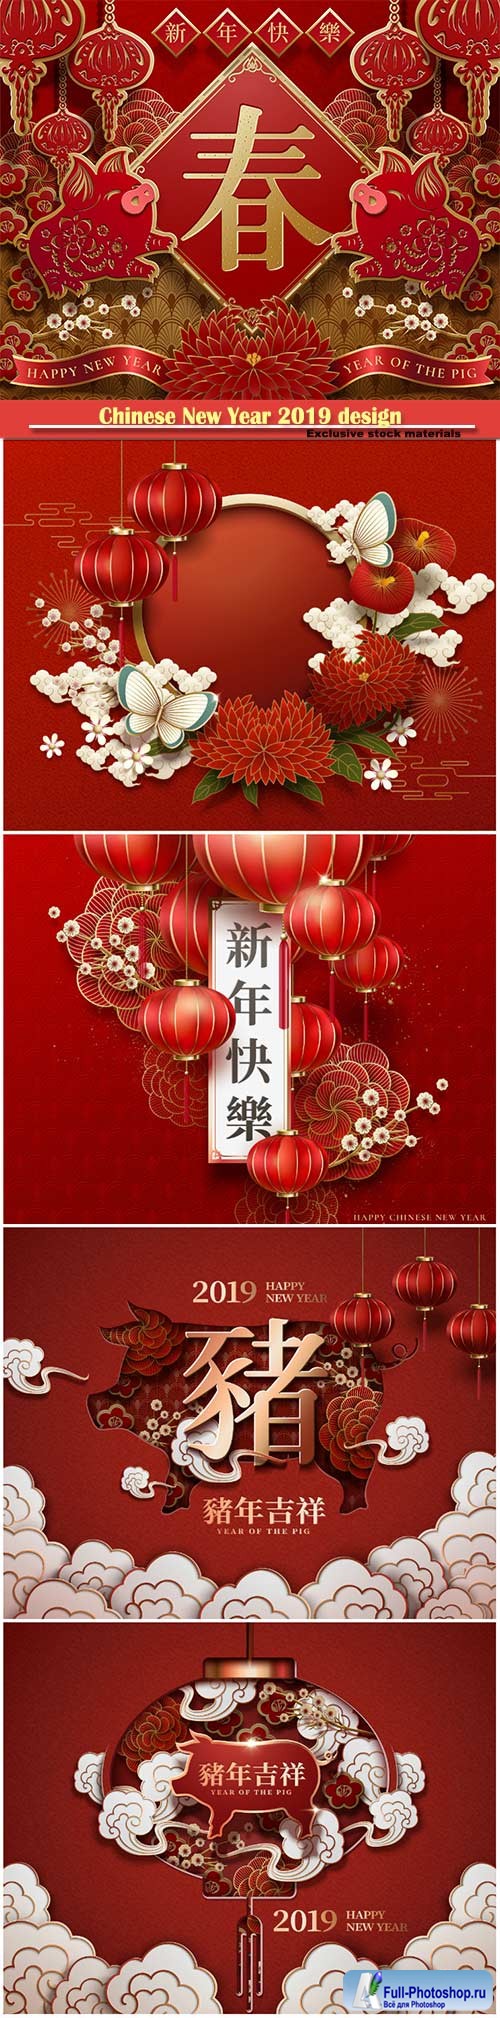 Chinese New Year 2019 festive design vector illustration